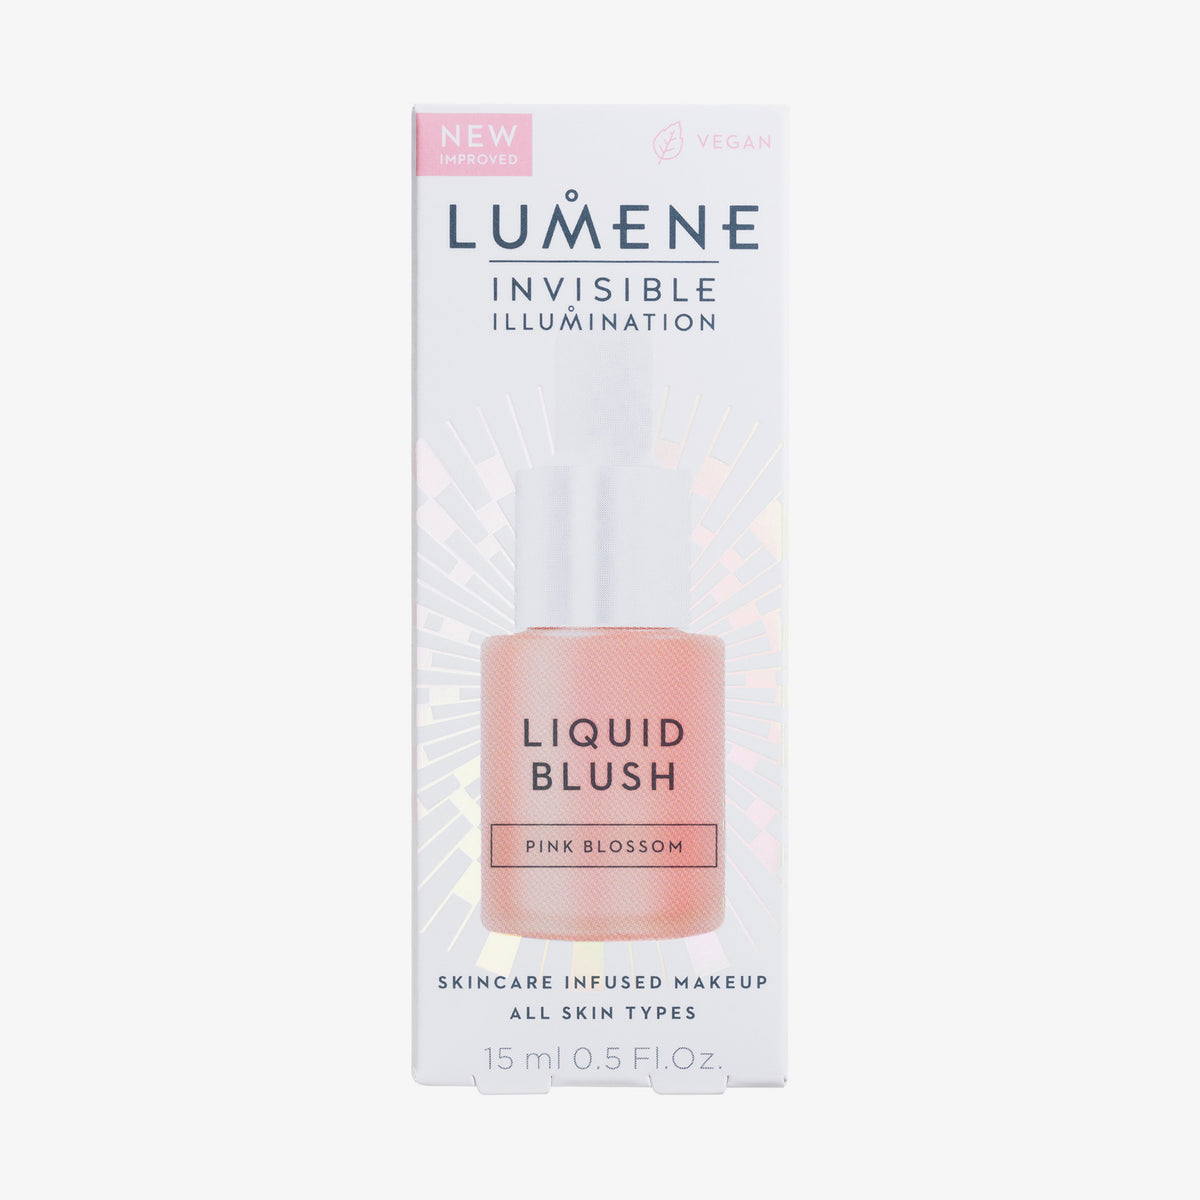 Lumene | INVISIBLE ILLUMINATION Liquid Blush